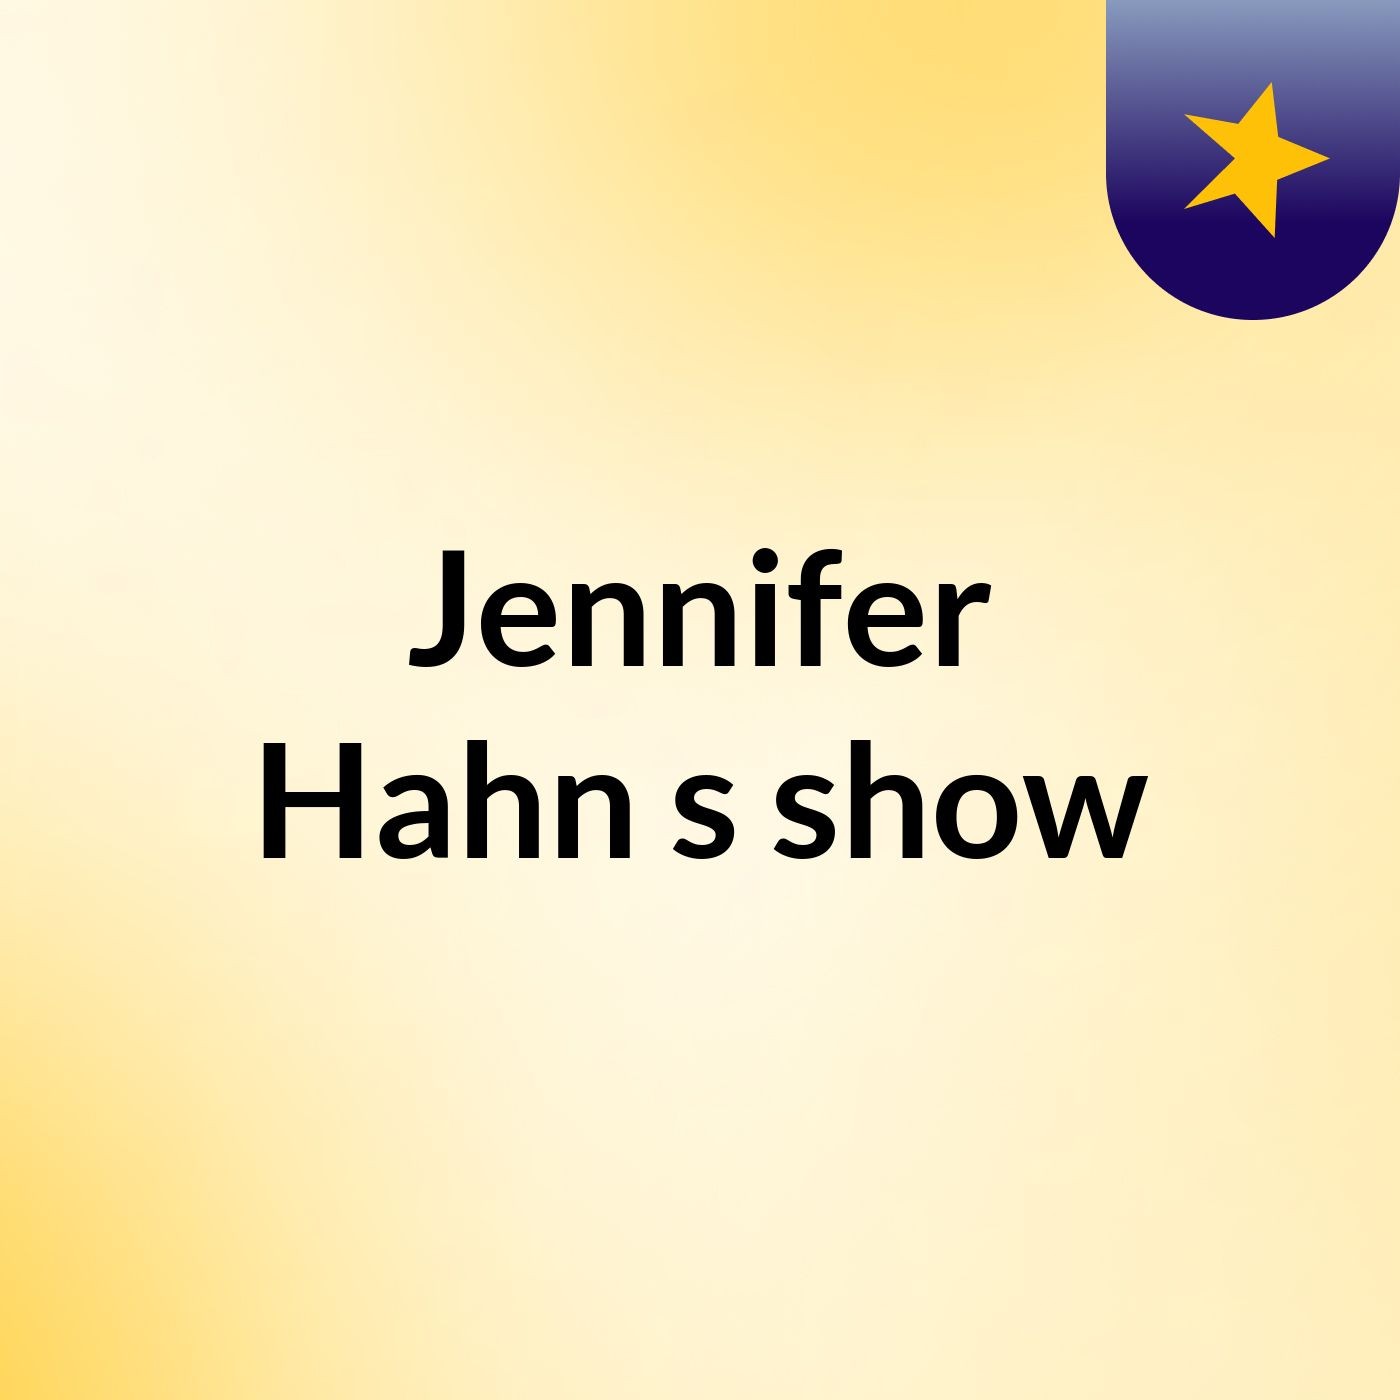 Jennifer Hahn's show